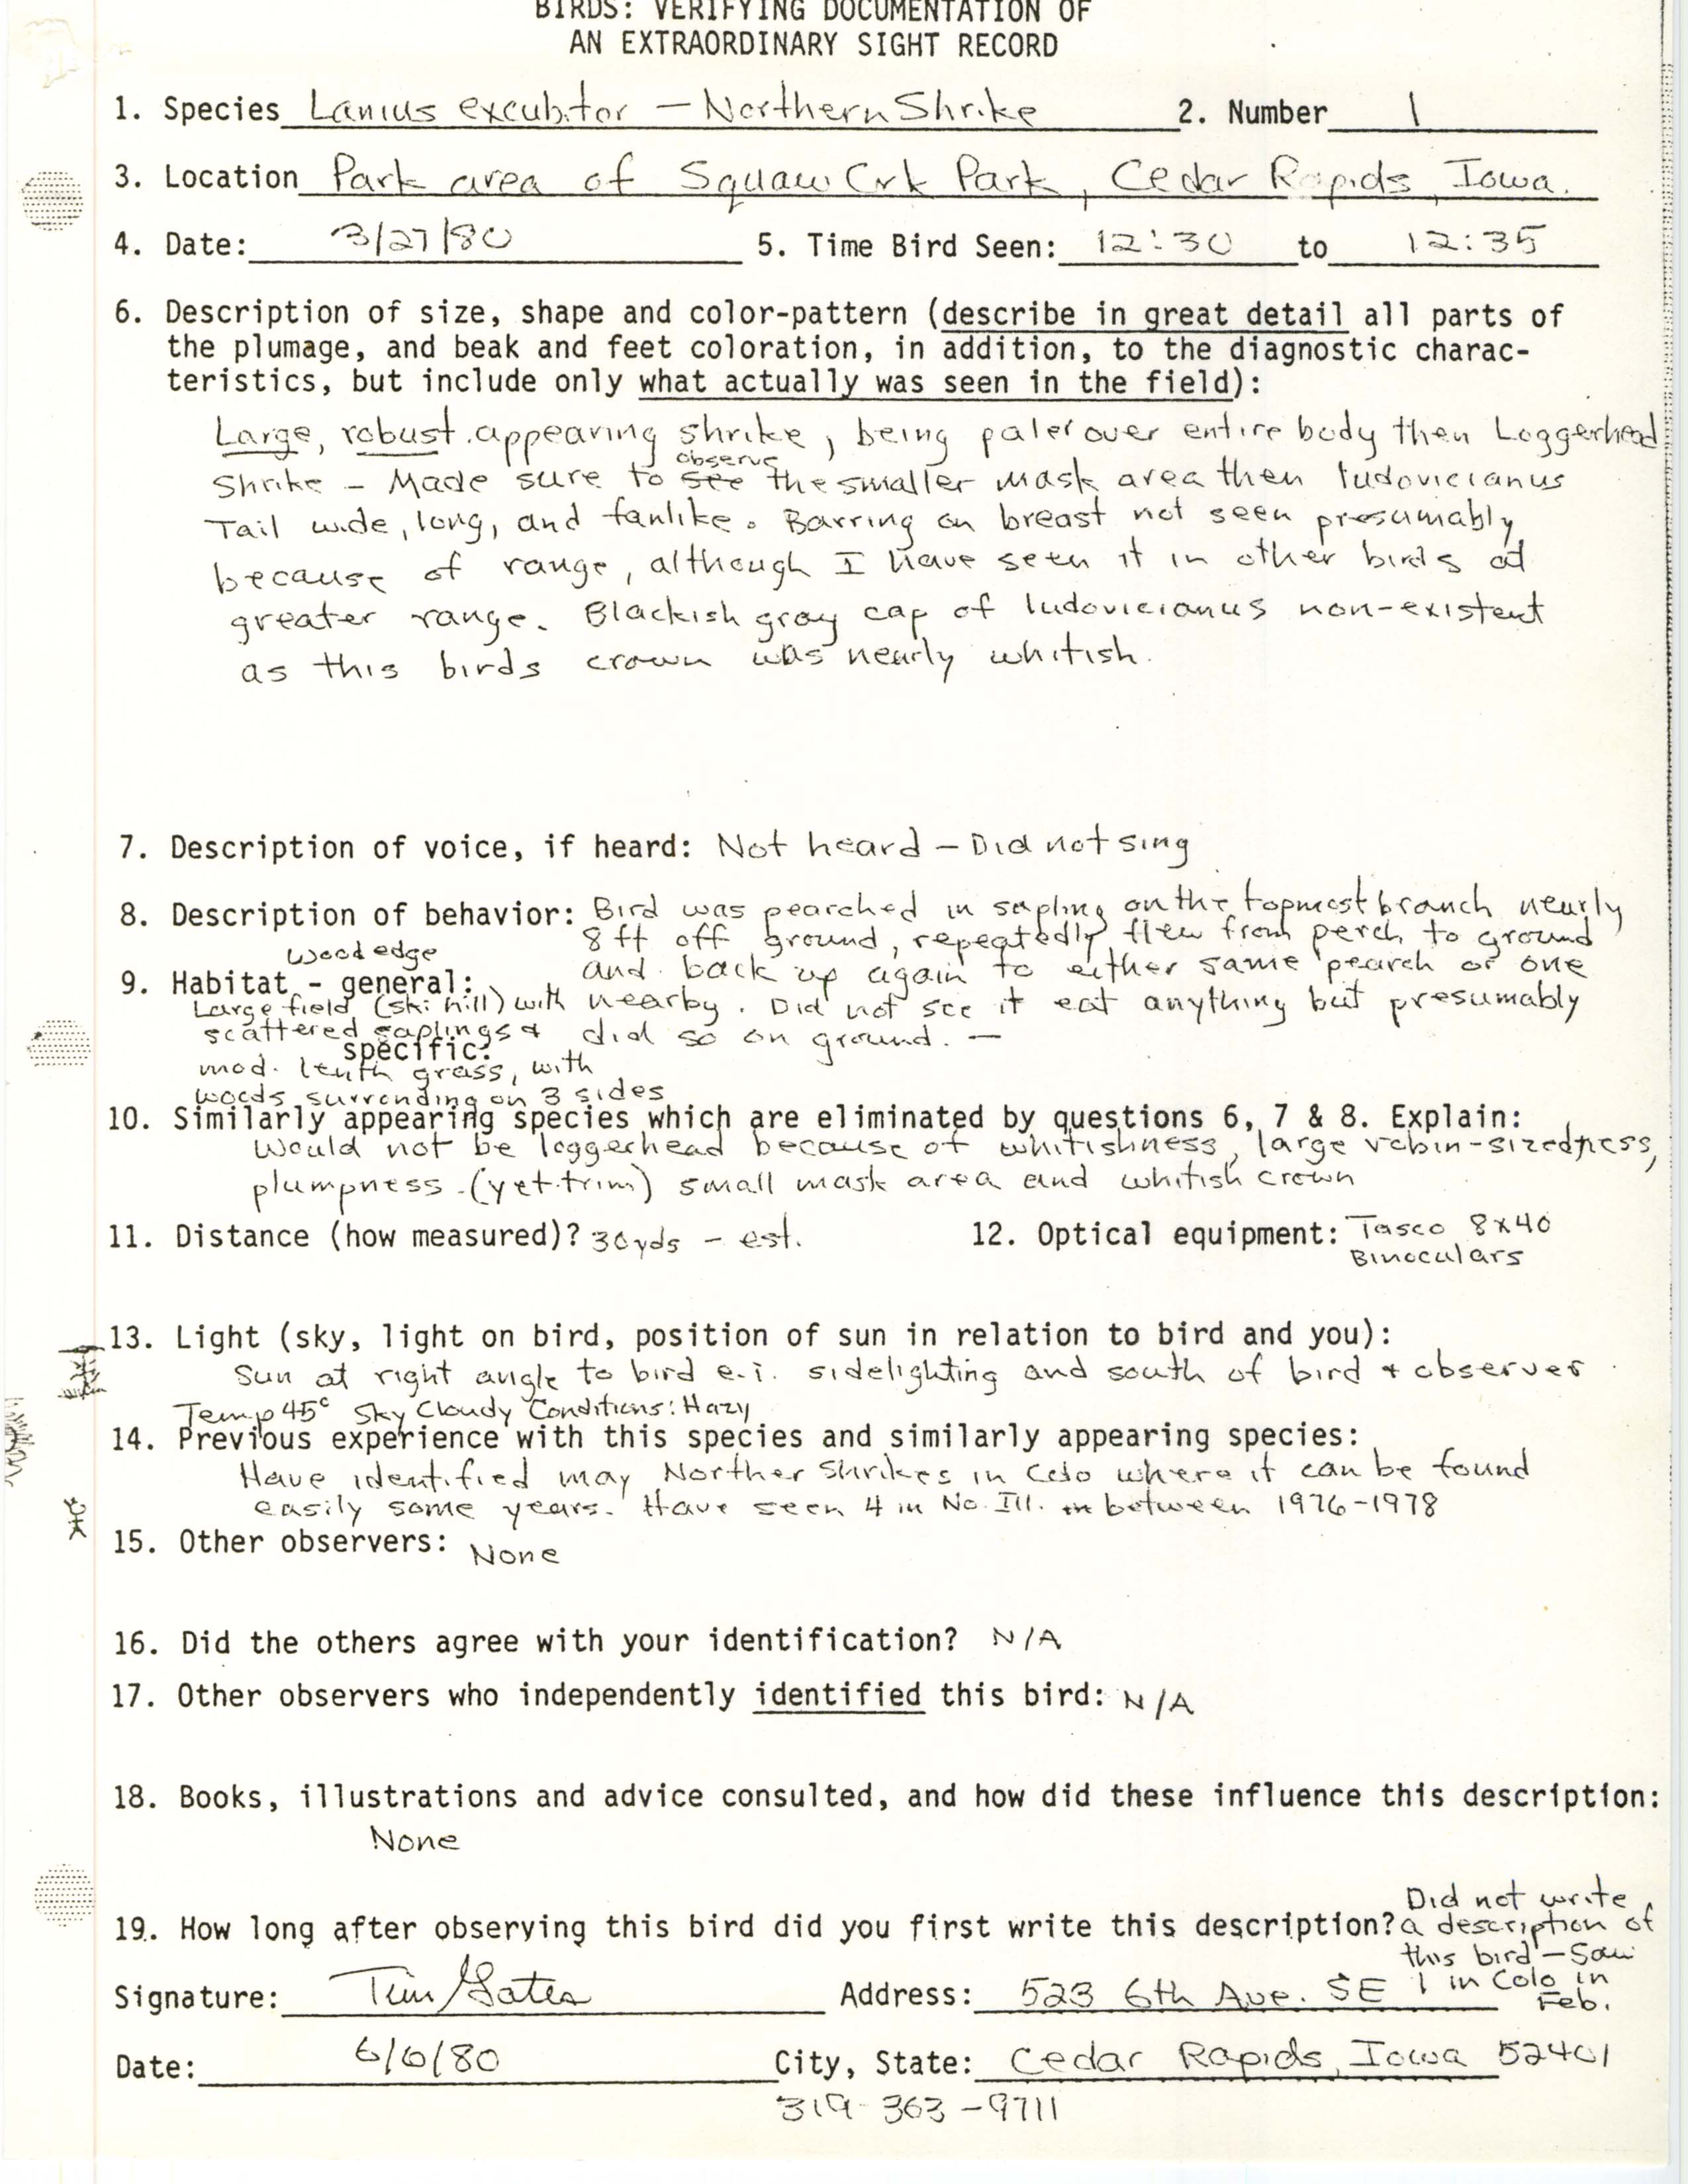 Rare bird documentation form for Northern Shrike at Squaw Creek Park in Cedar Rapids, 1980